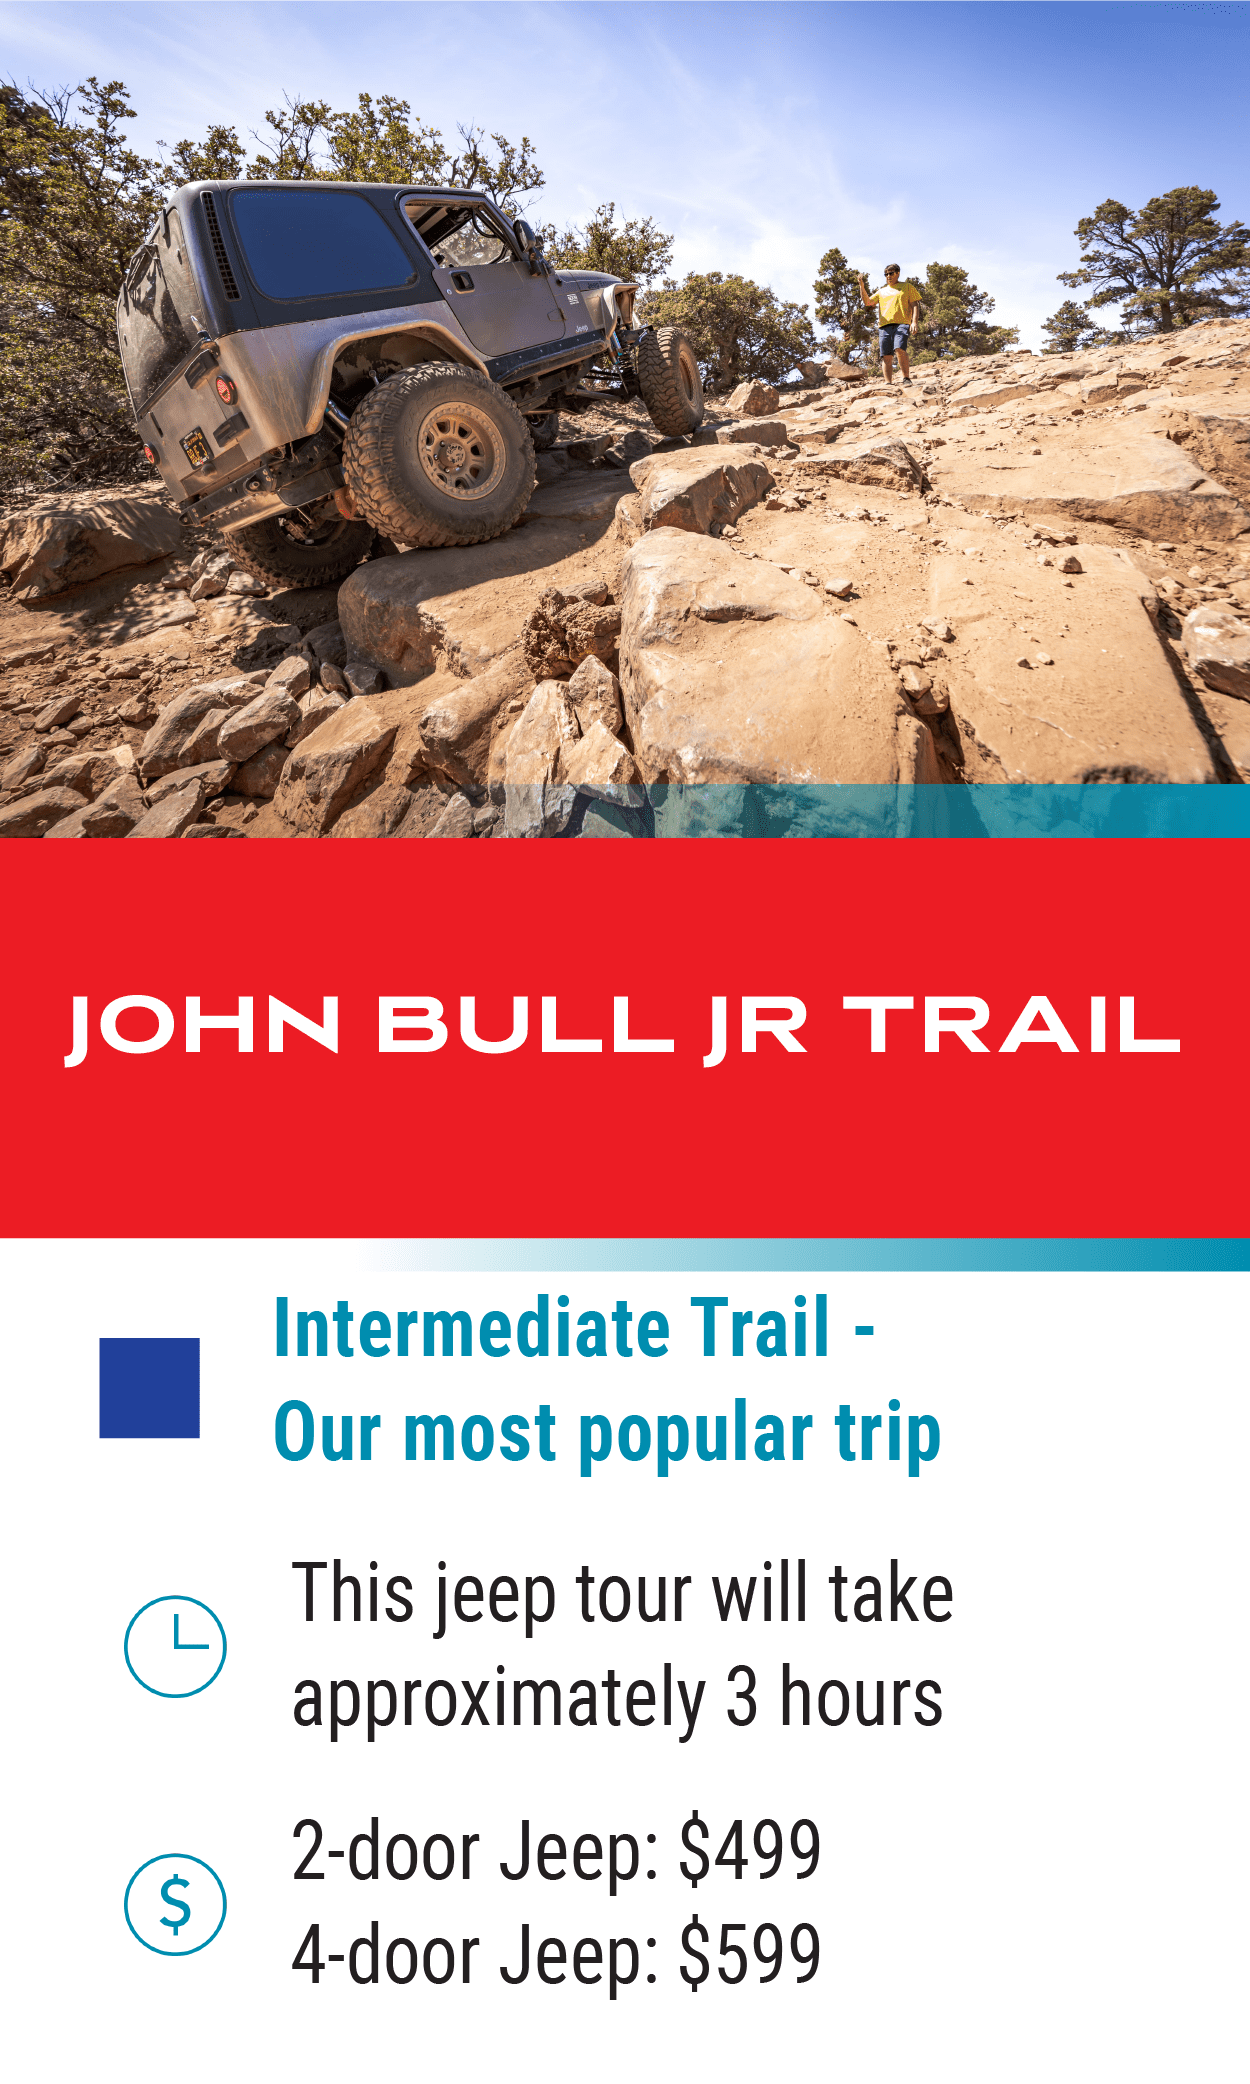 John Bull Jr Trail